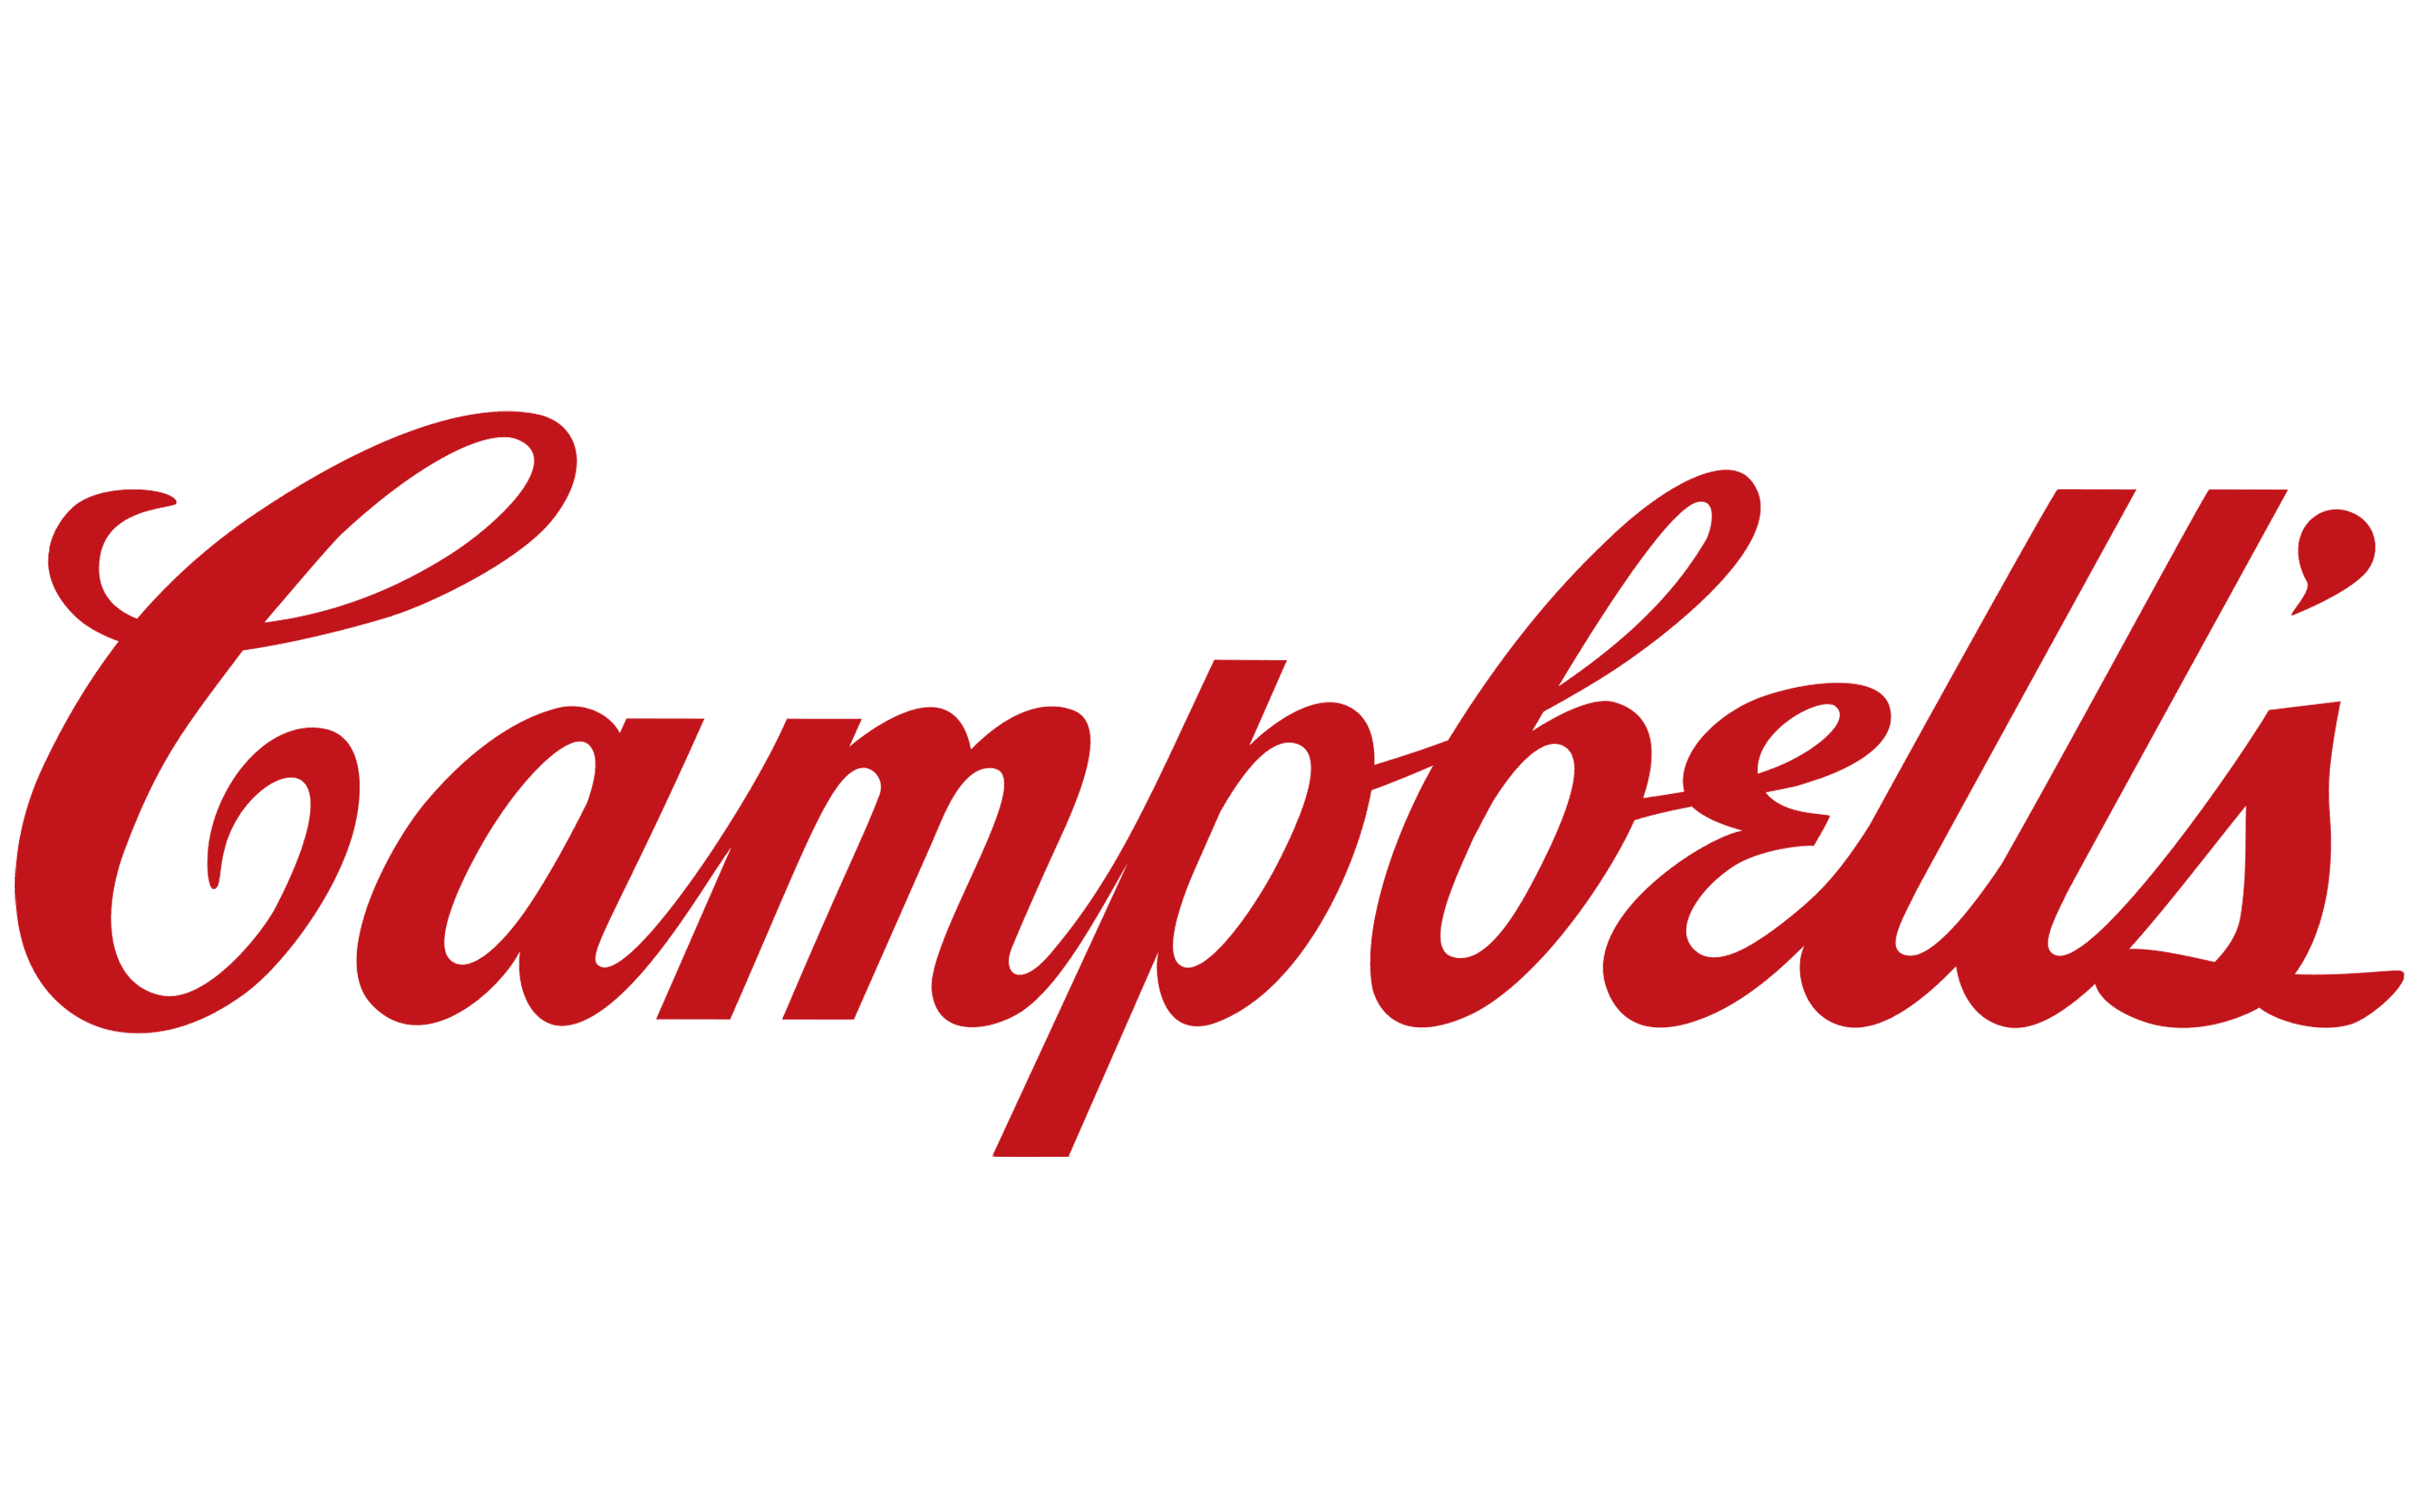 Campbell's Brand Logo